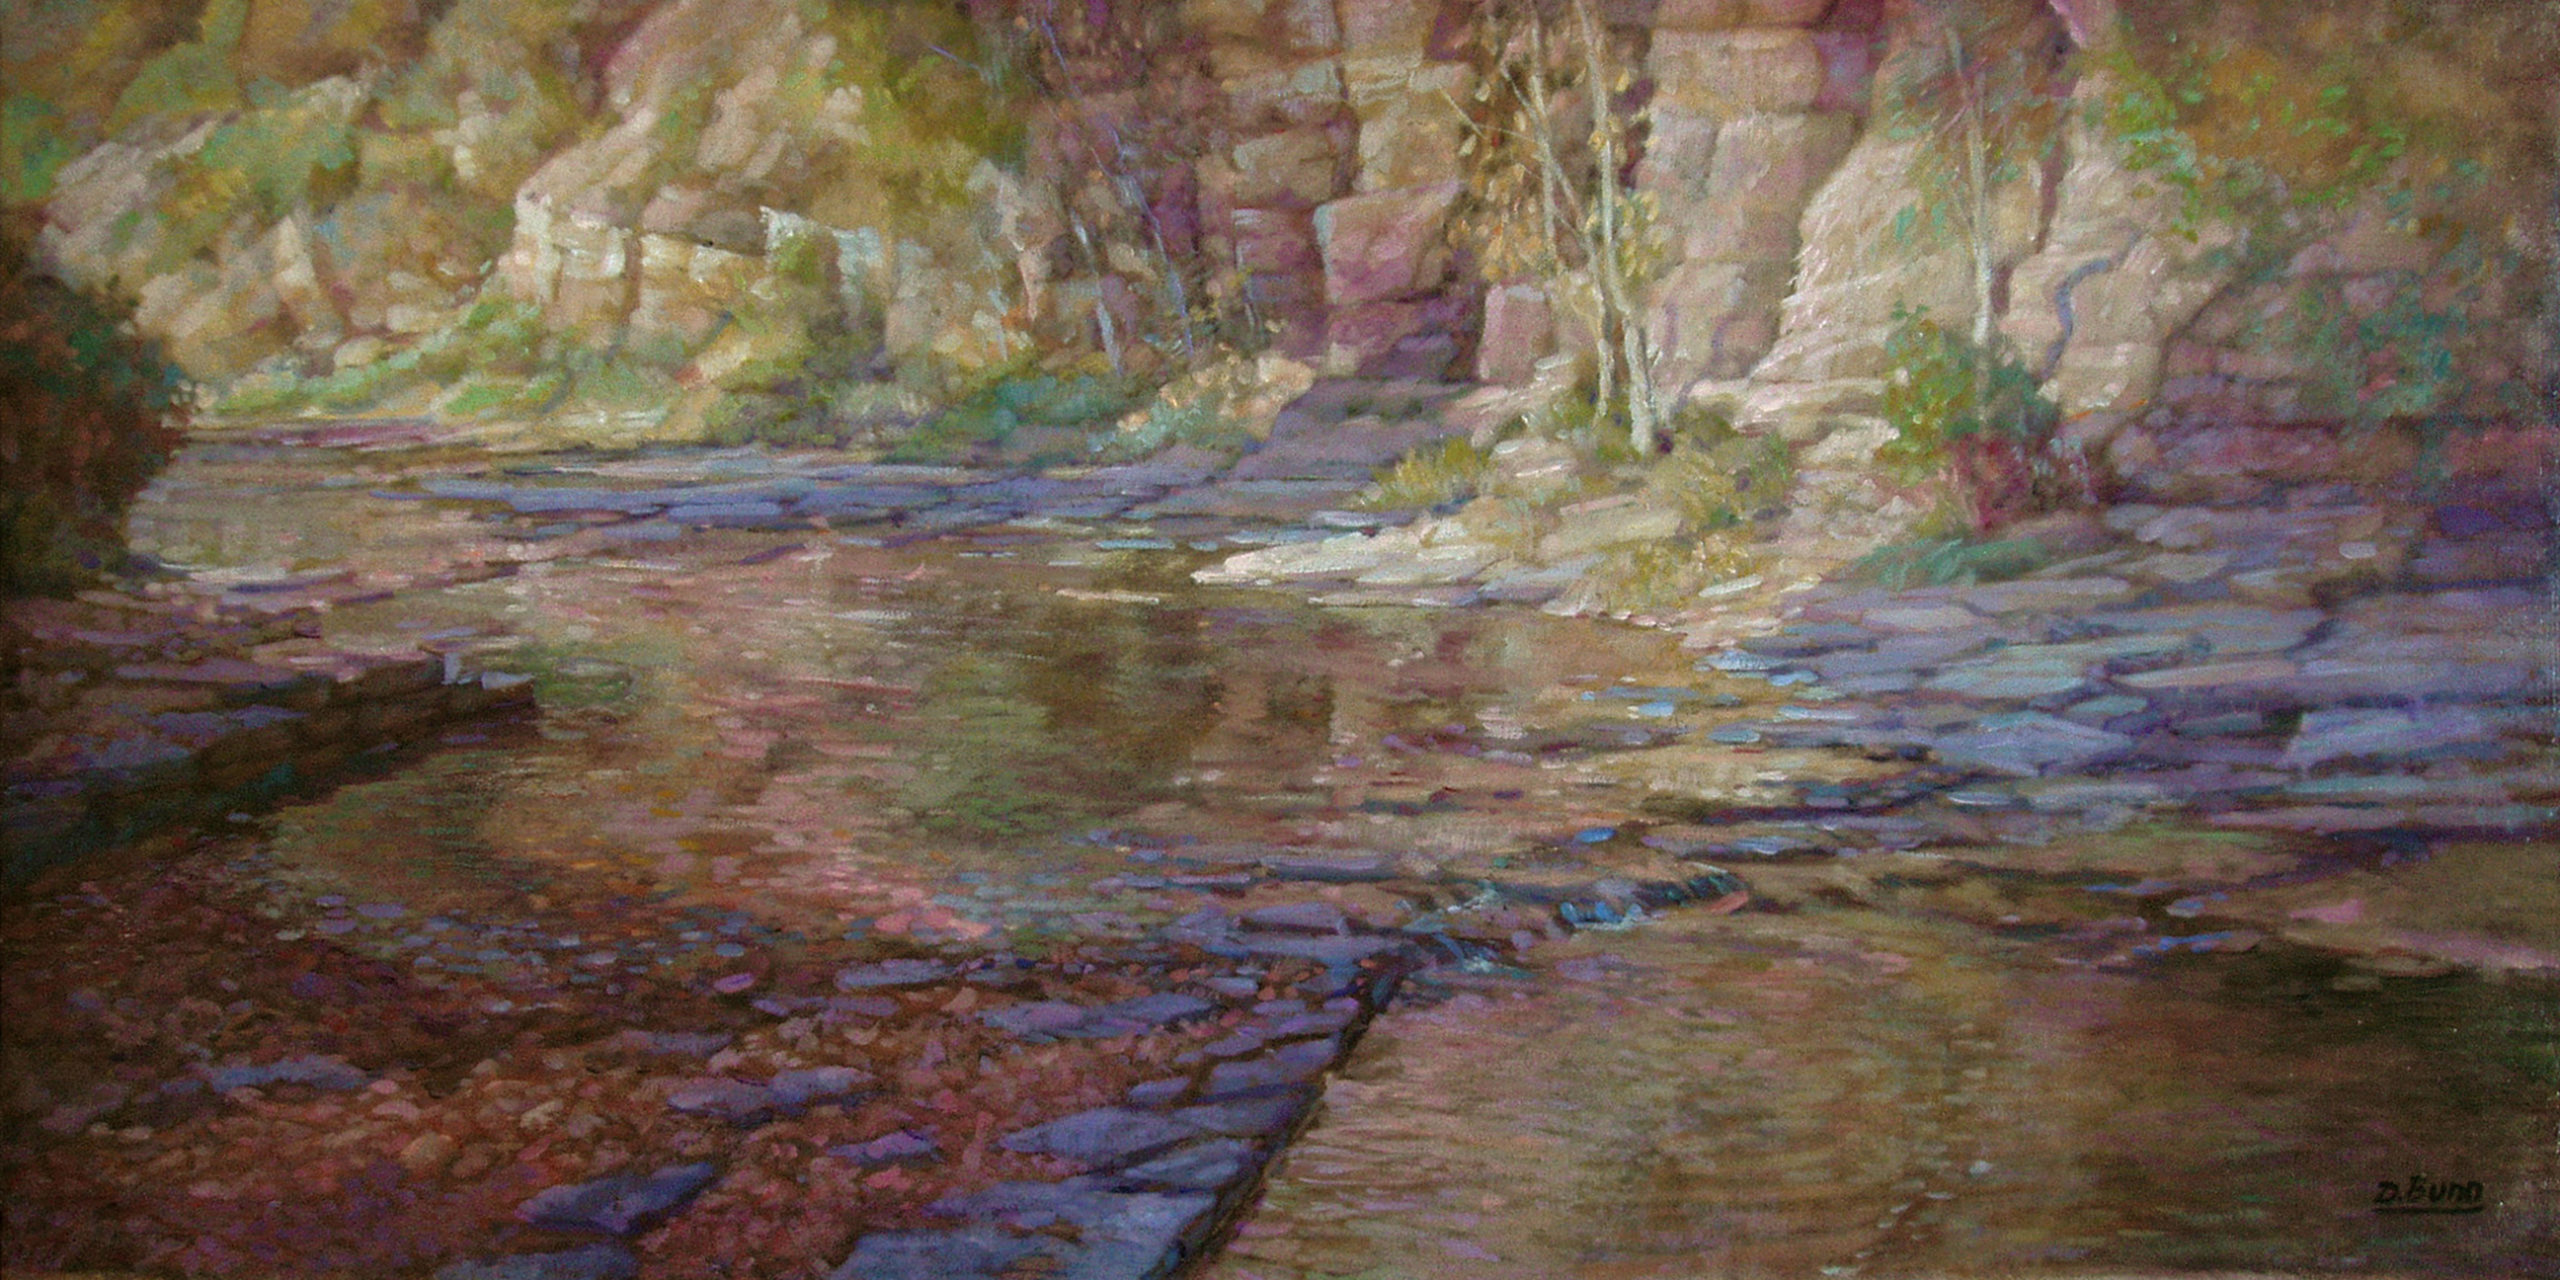 Dot Bunn, "Cool Waters," oil on panel, 18 x 36 in.